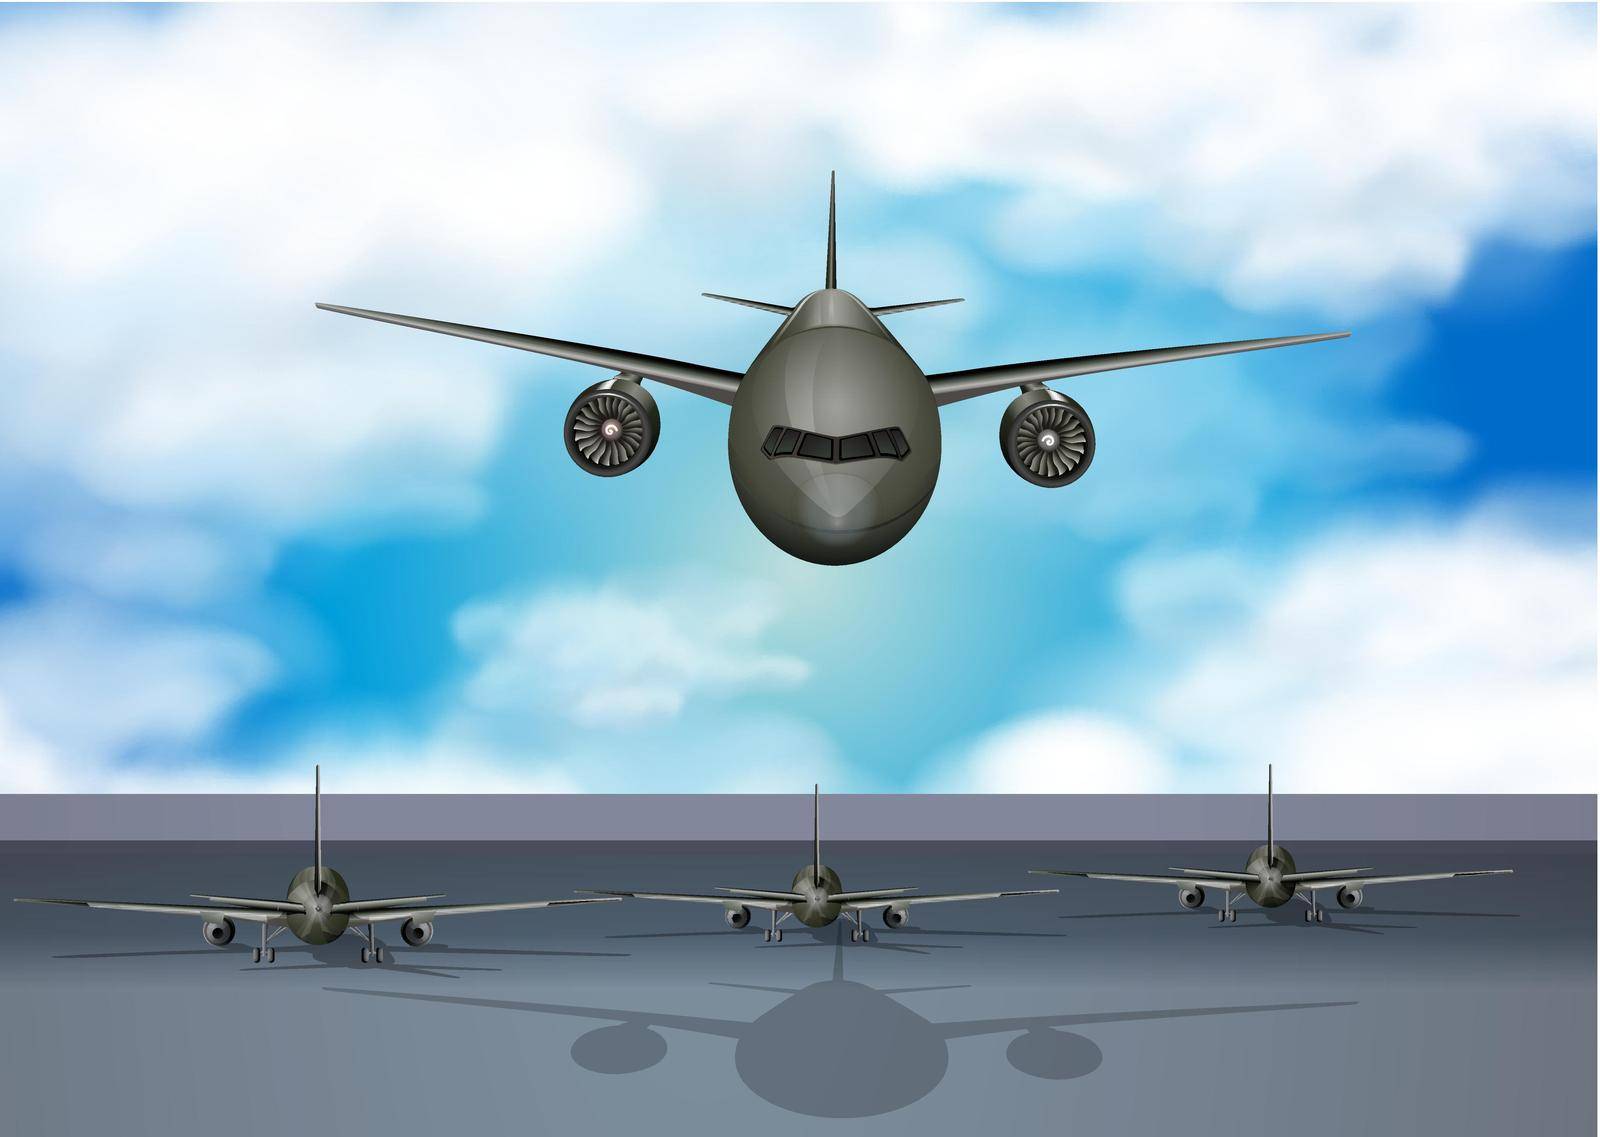 Airplanes landing on runway illustration